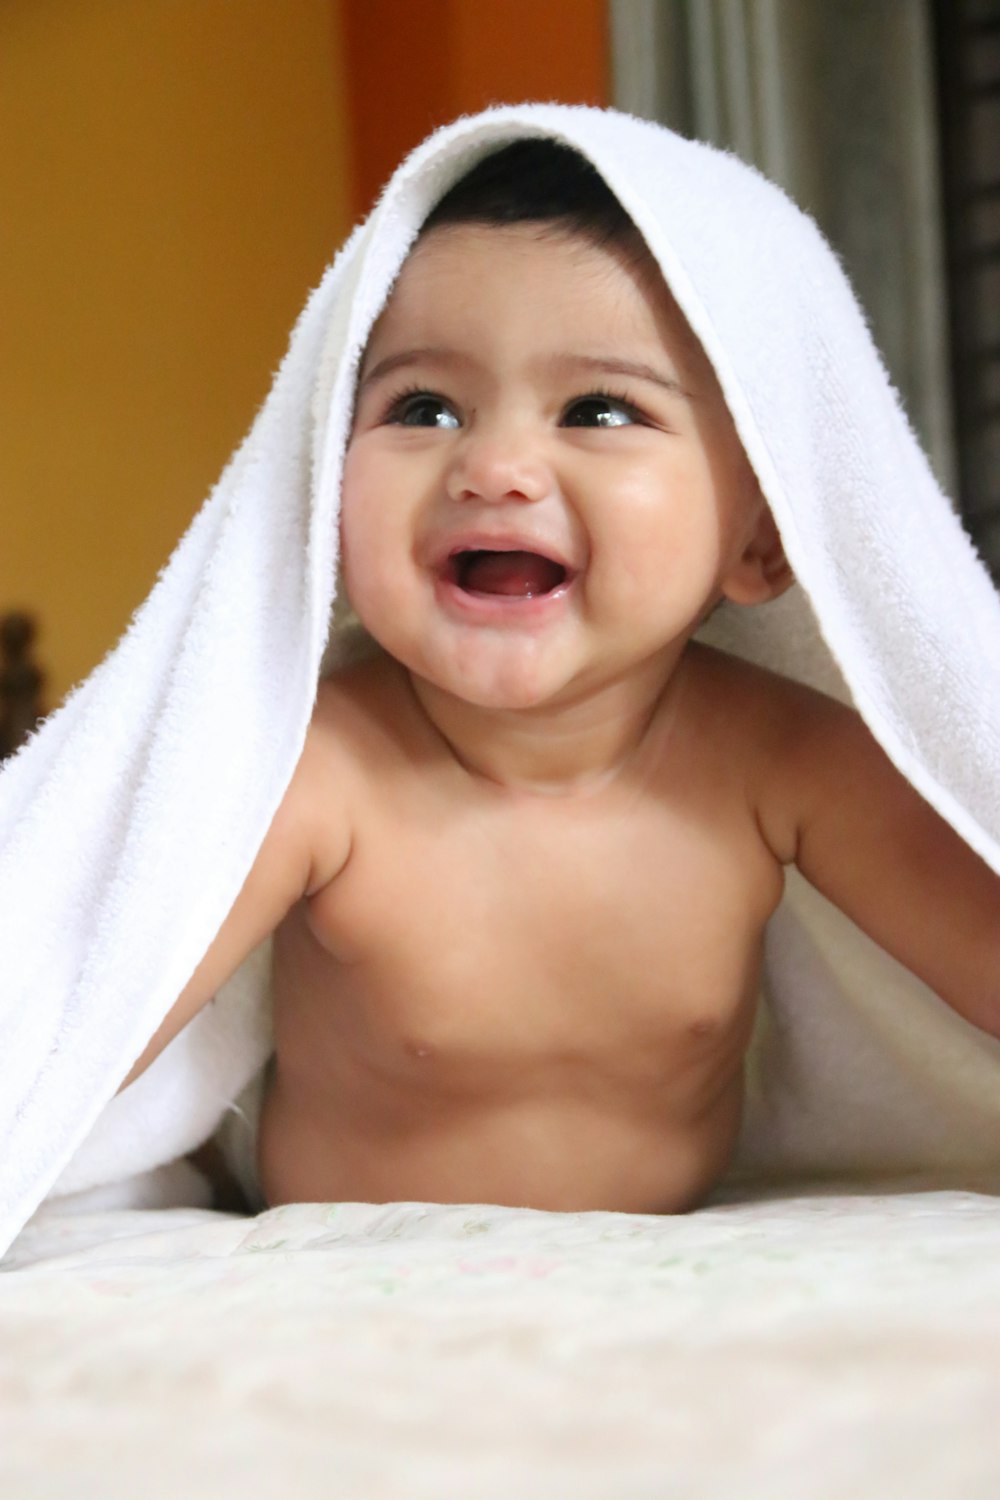 Niño en topless cubierto con toalla blanca